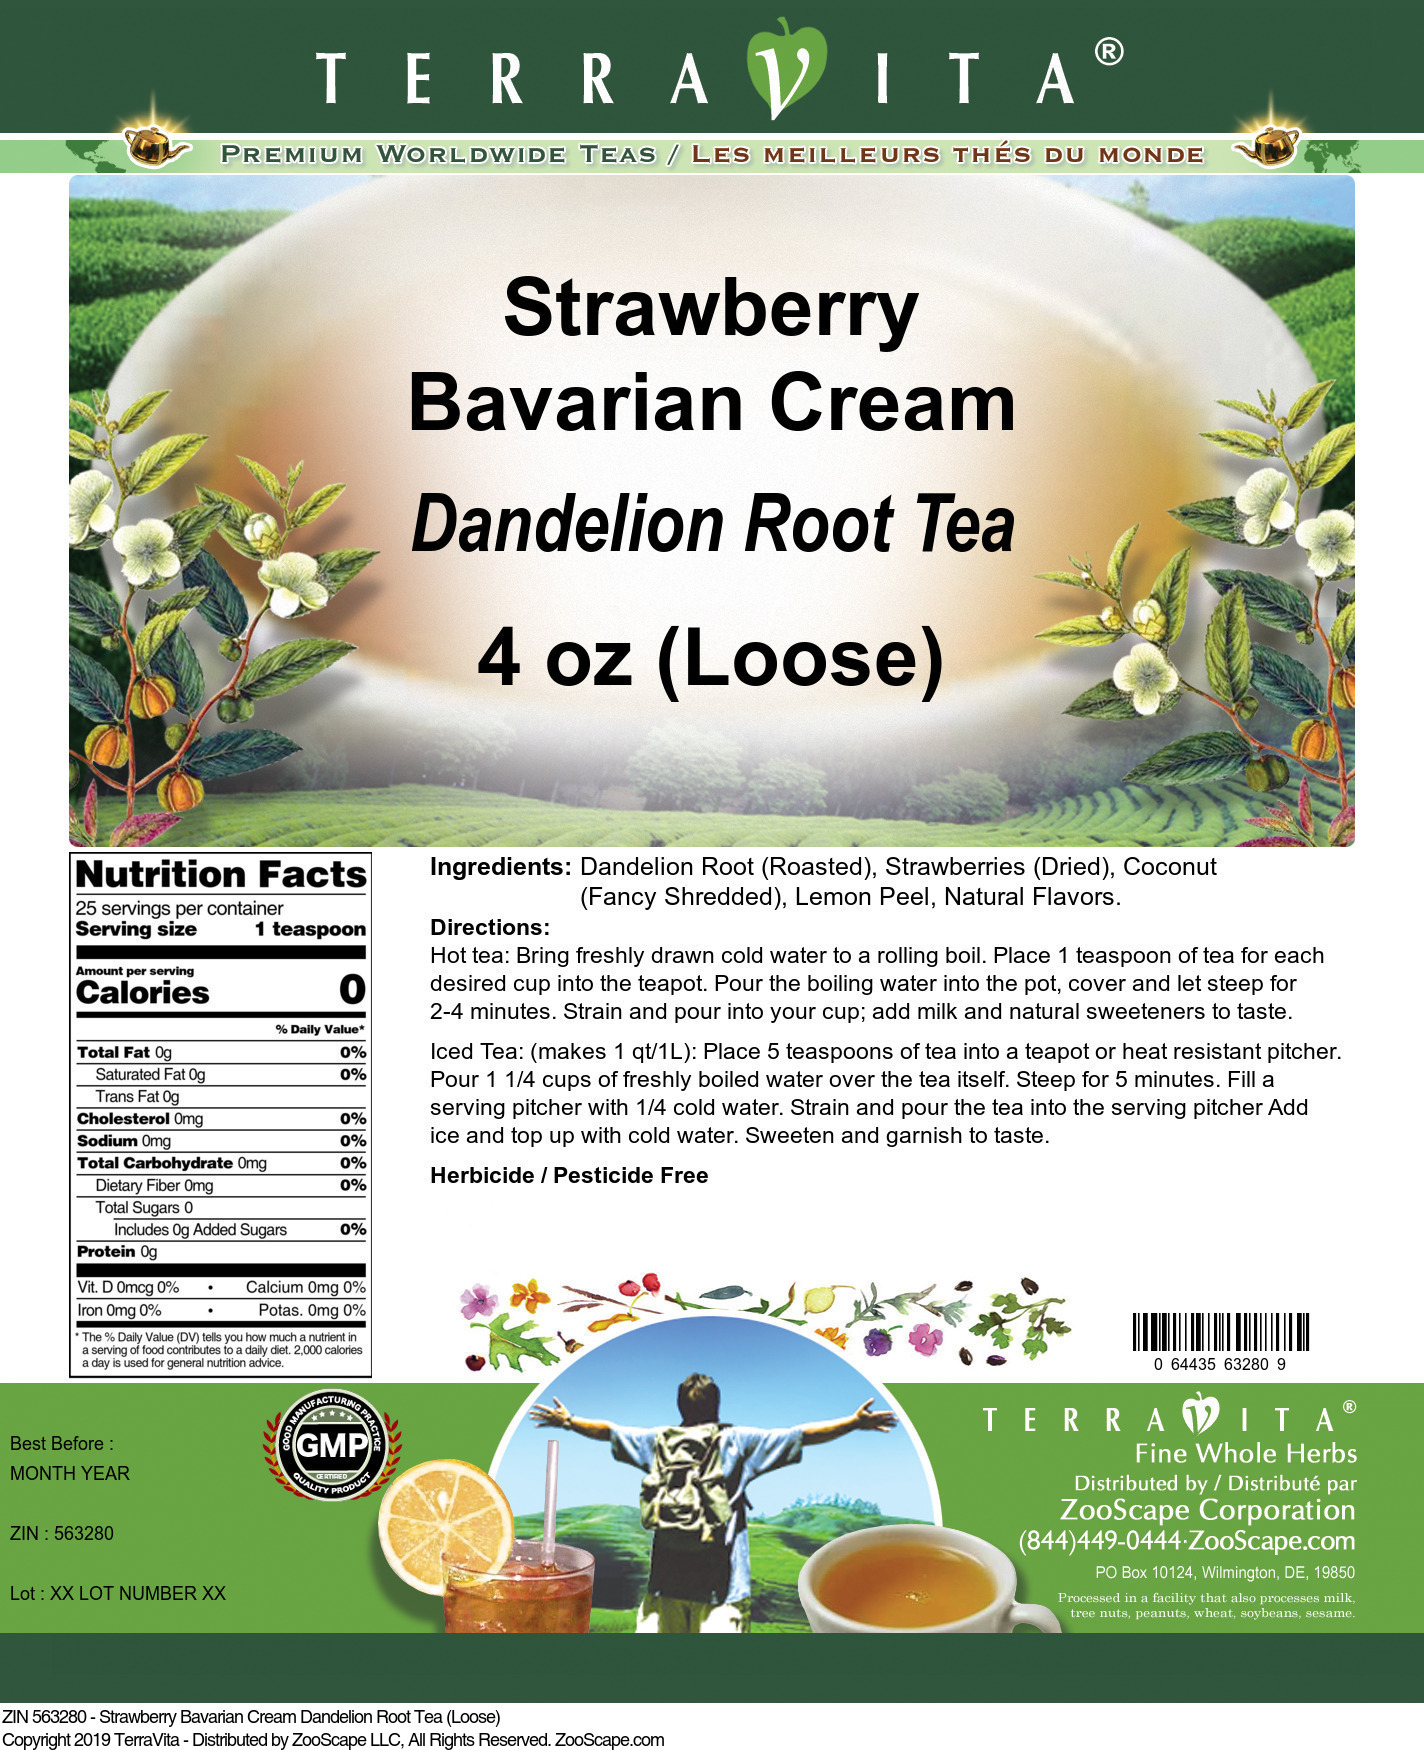 Strawberry Bavarian Cream Dandelion Root Tea (Loose) - Label